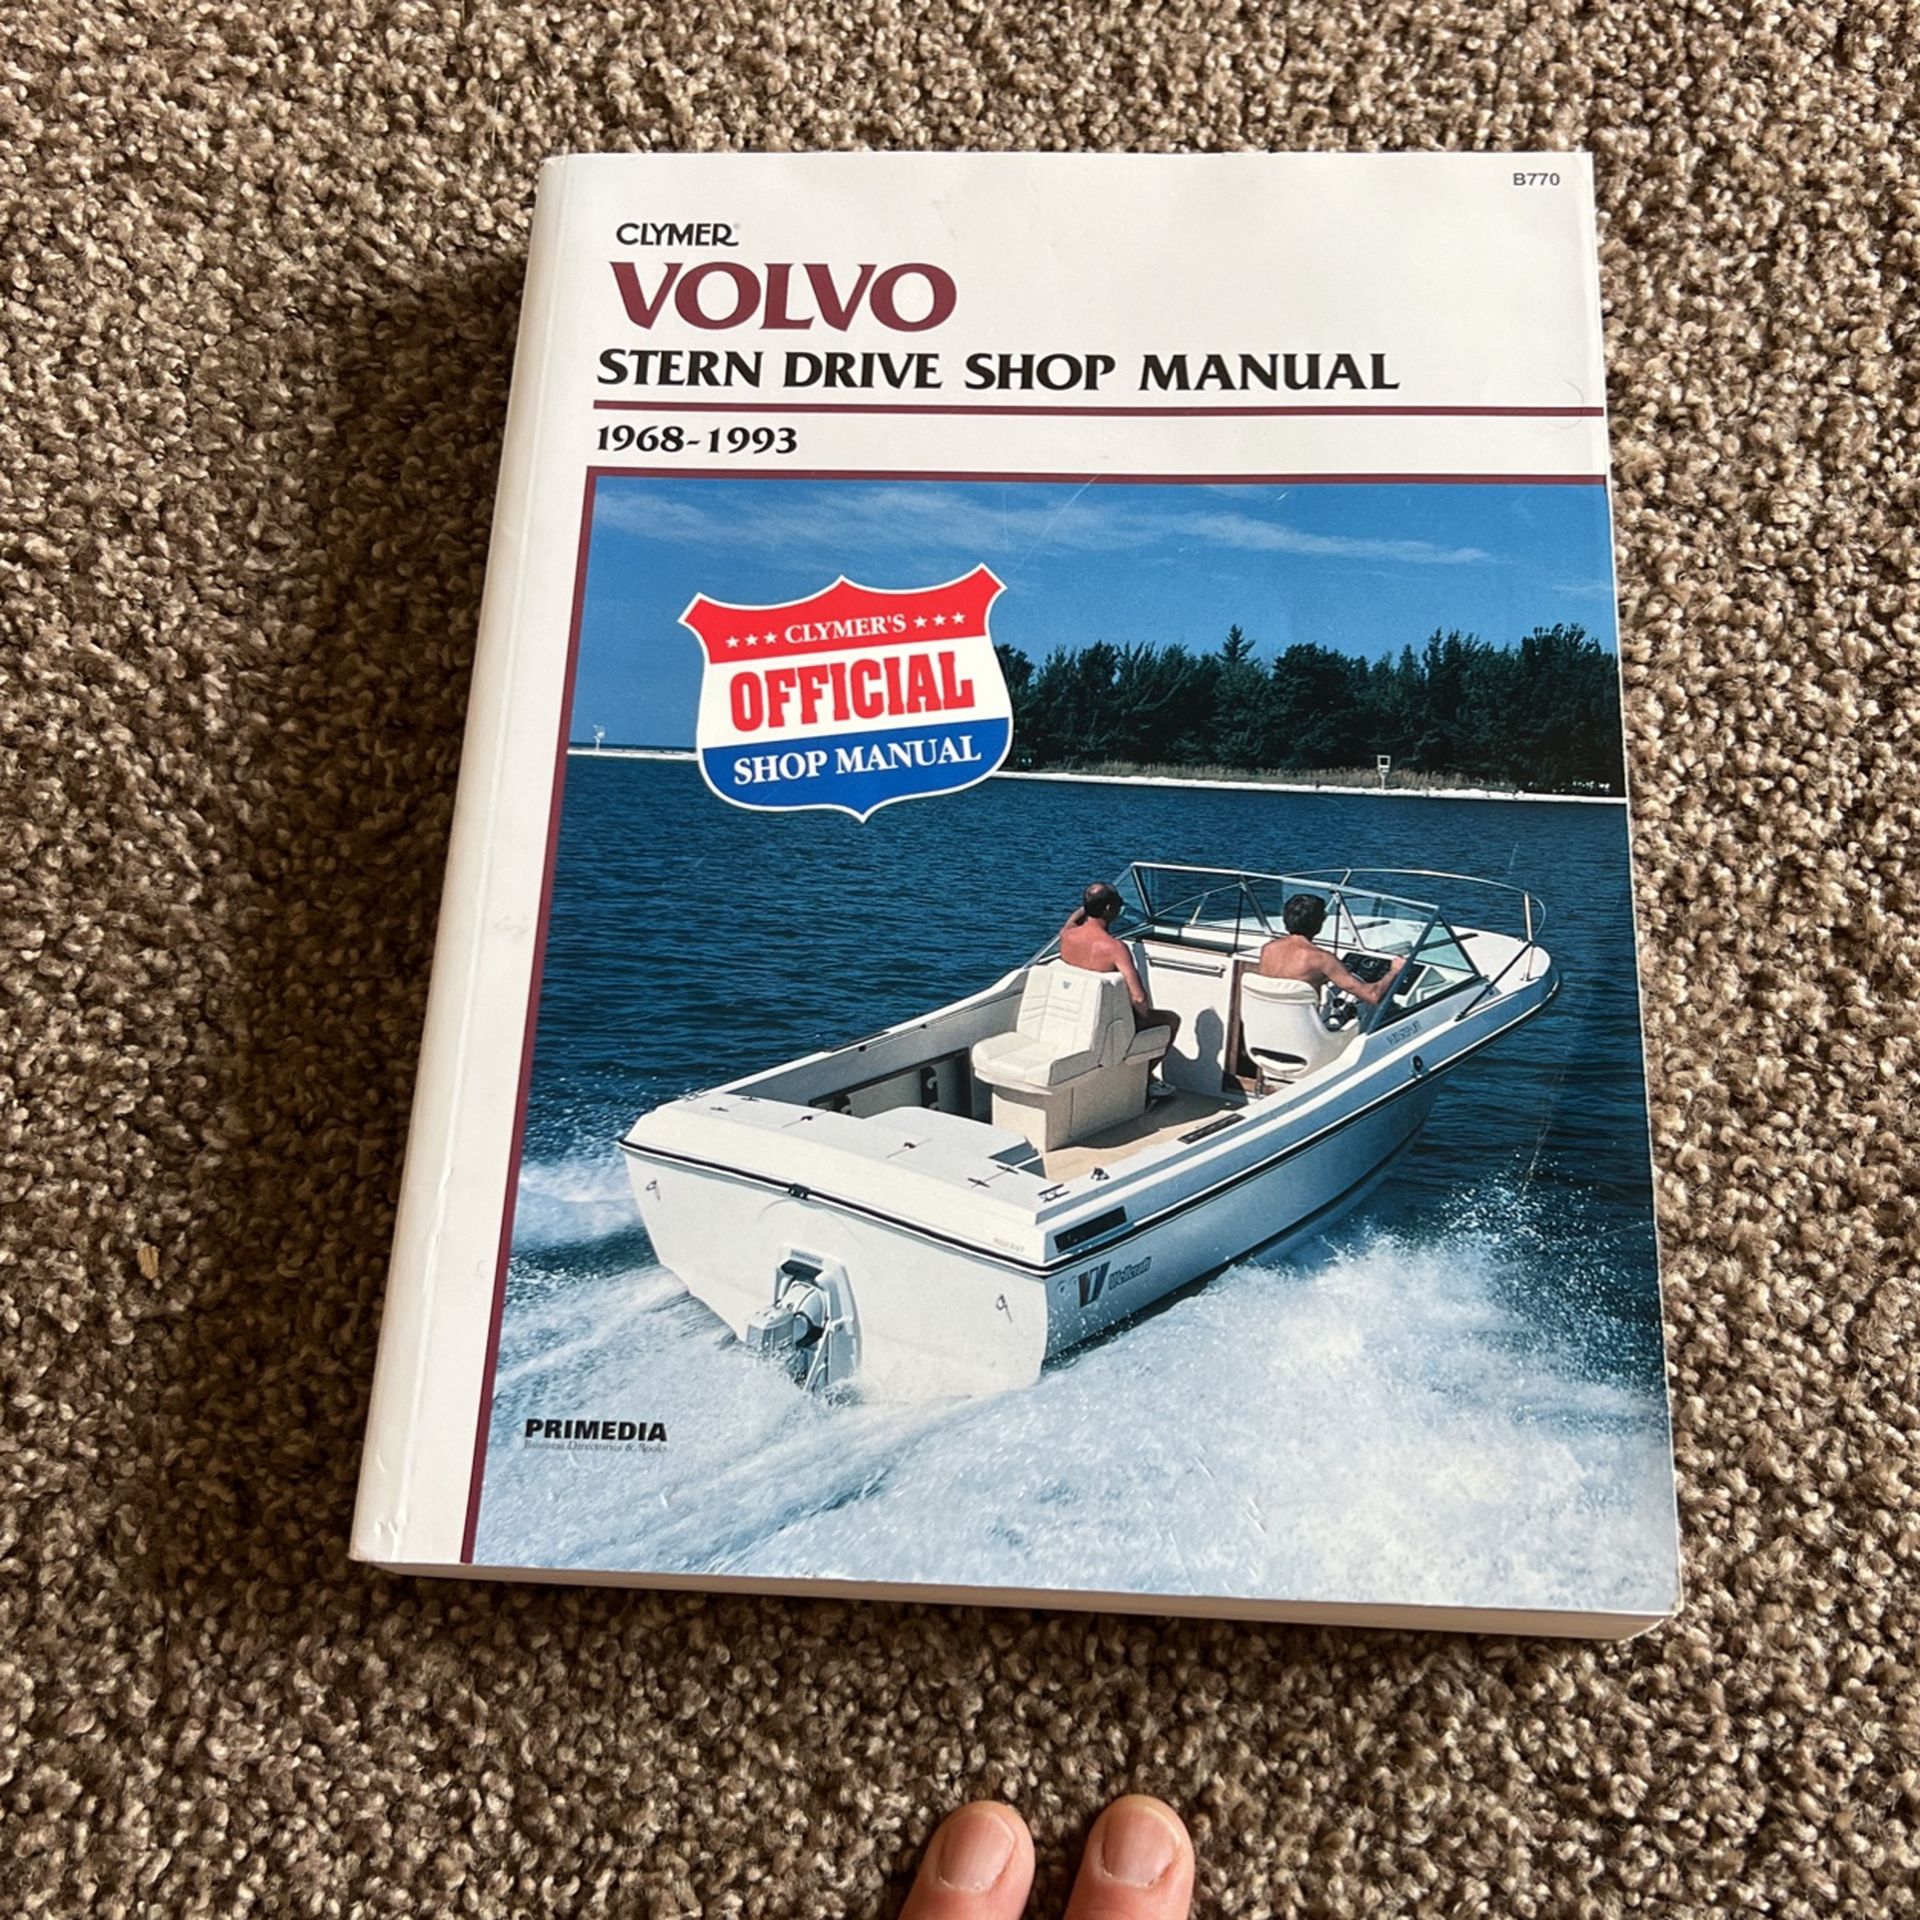 Clymer Volvo Shop Manual